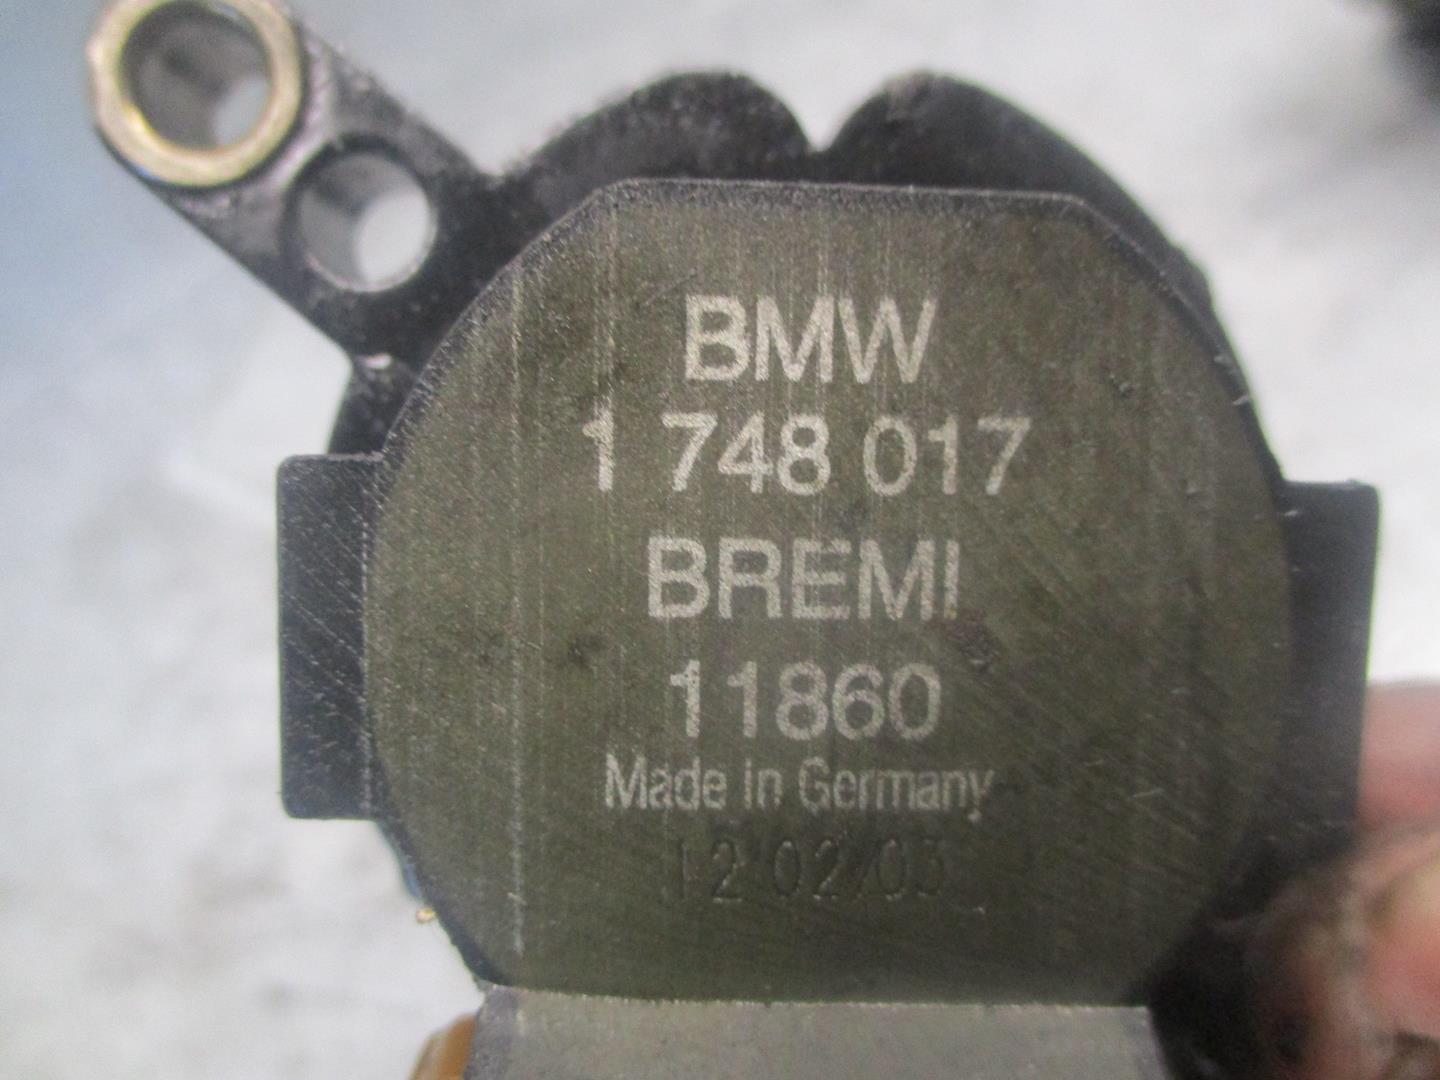 BMW X5 E53 (1999-2006) High Voltage Ignition Coil 1748017, 11860, BREMI 19769958